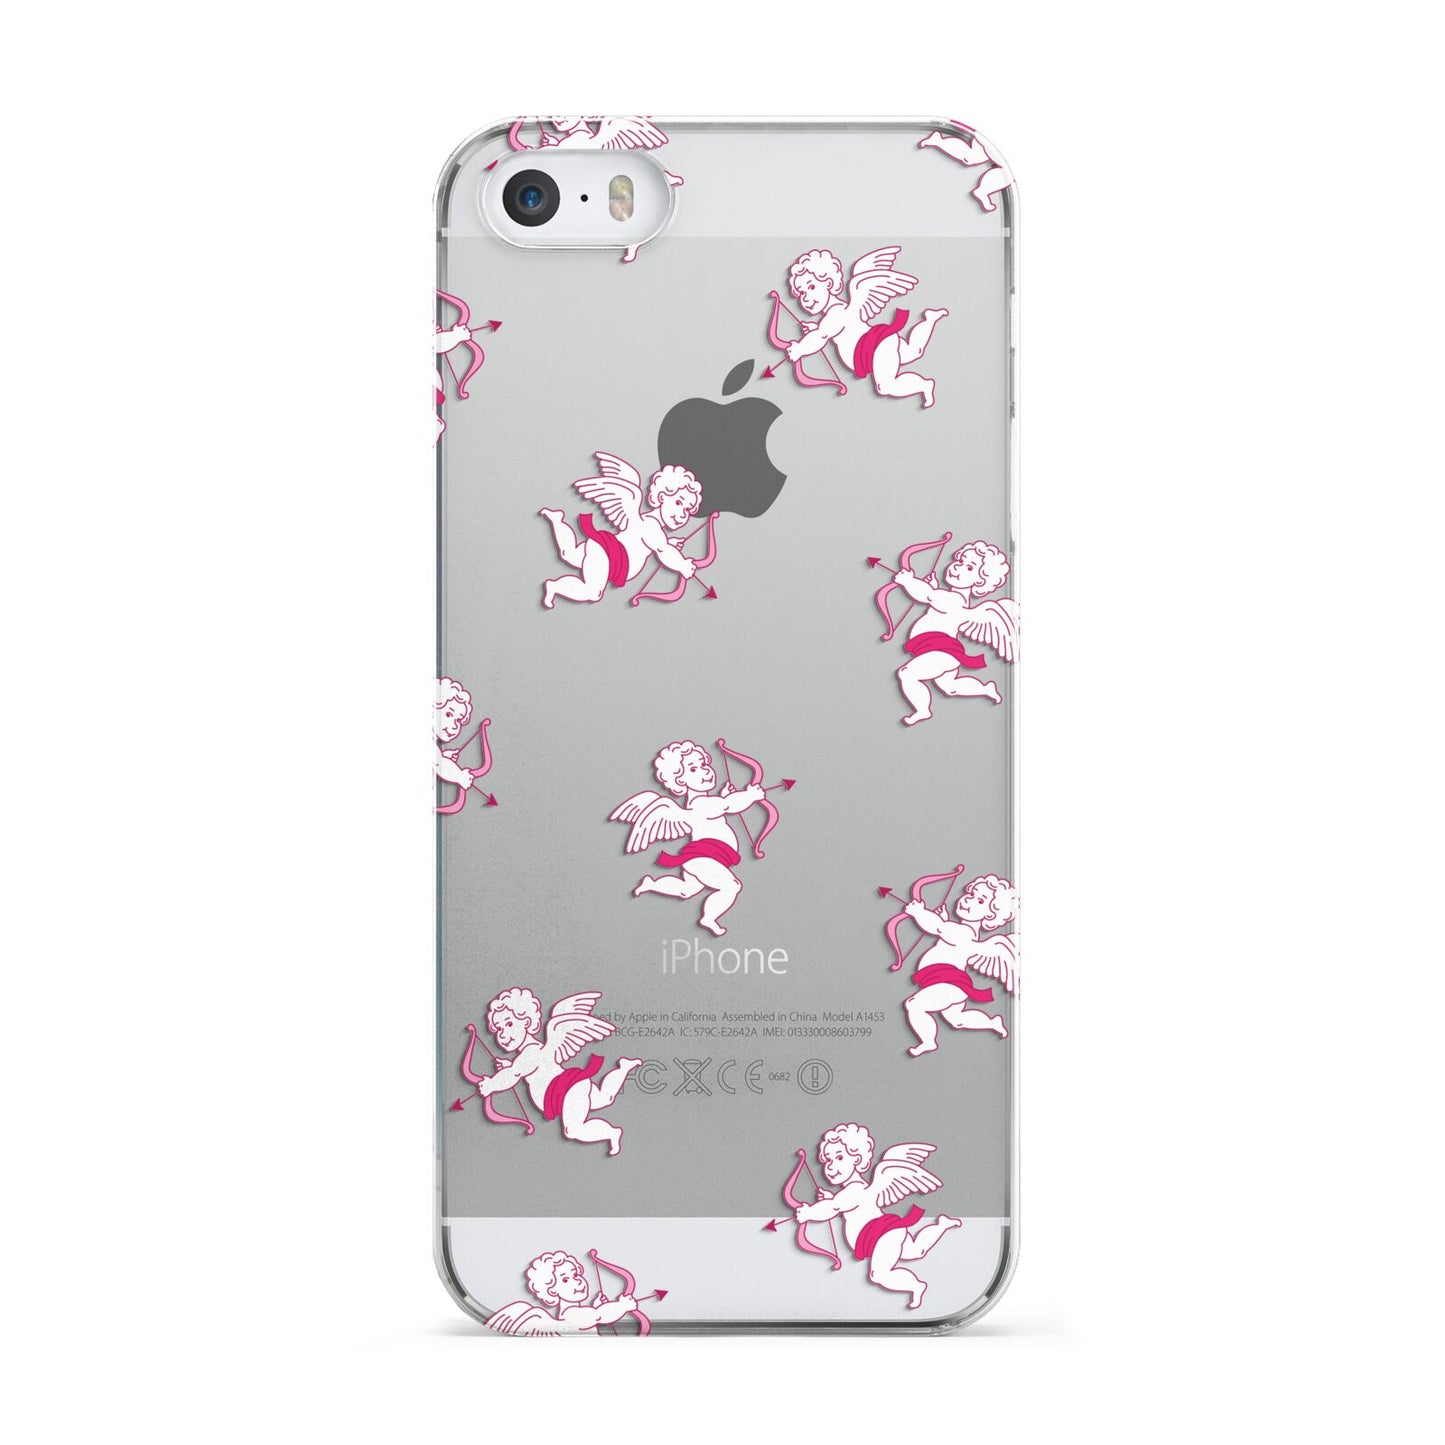 Cupid Apple iPhone 5 Case